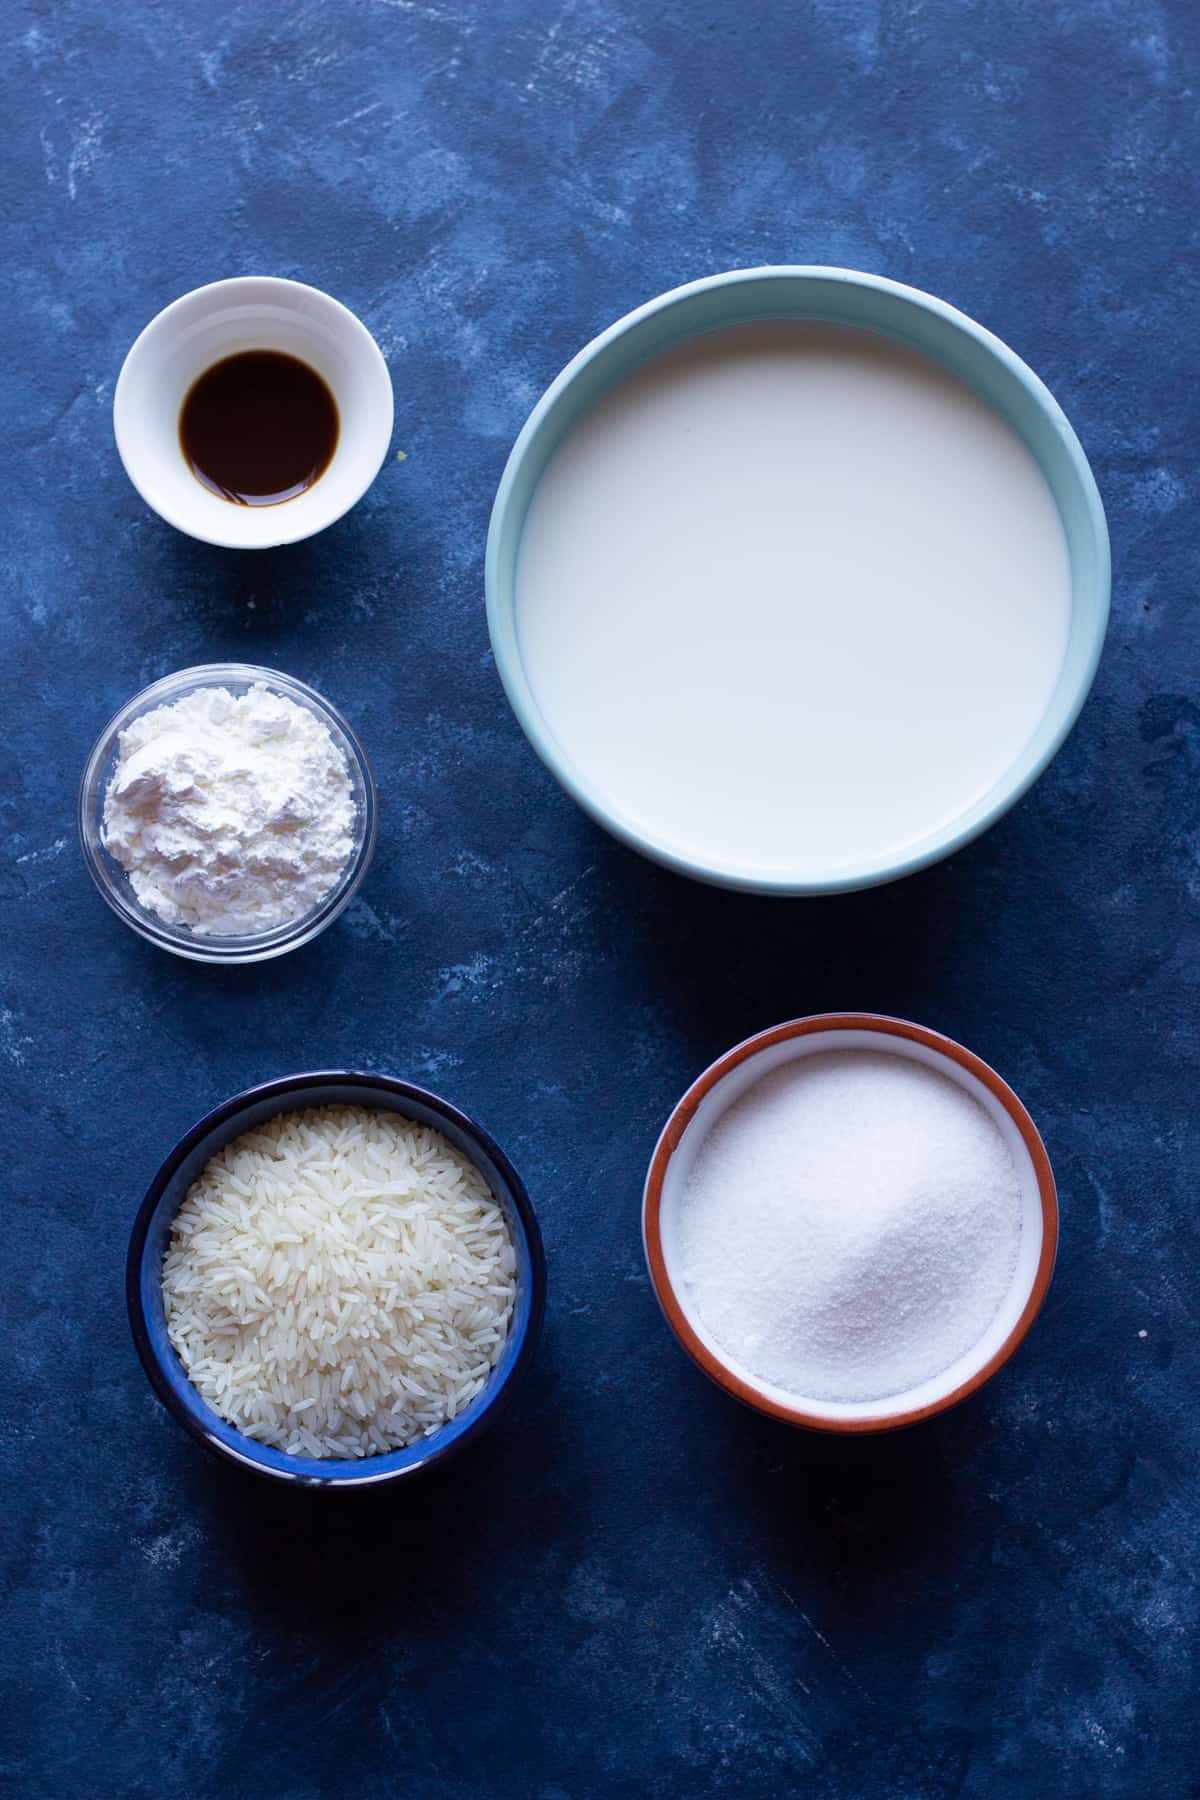 ingredients to make this Turkish recipe are rice, milk, vanilla extract, sugar and cornstarch. 